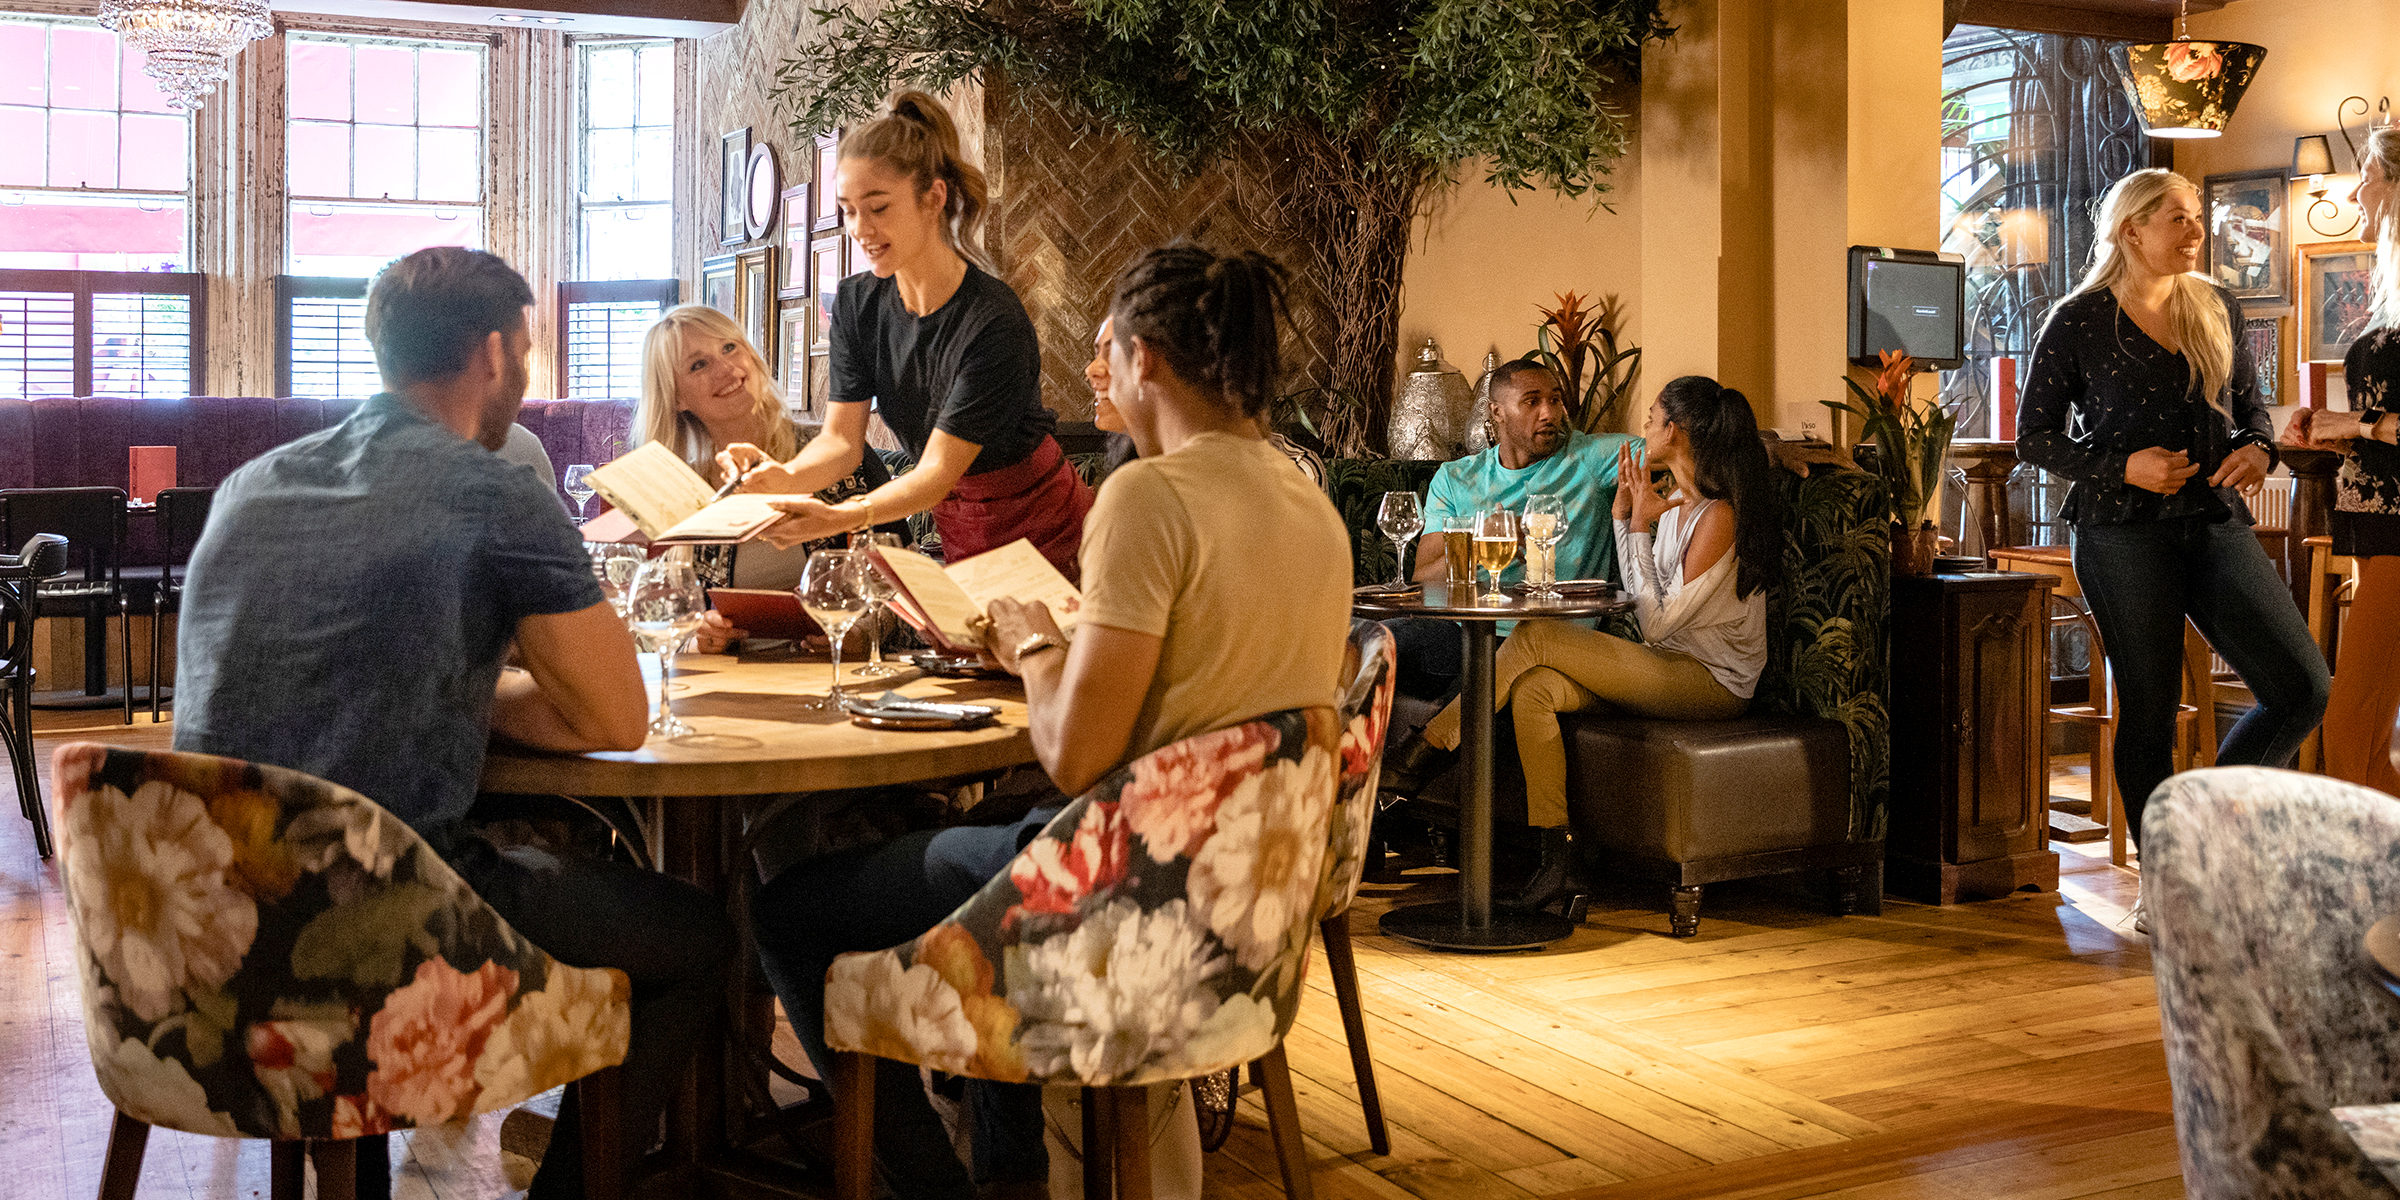 People in a restaurant | Source: Shutterstock